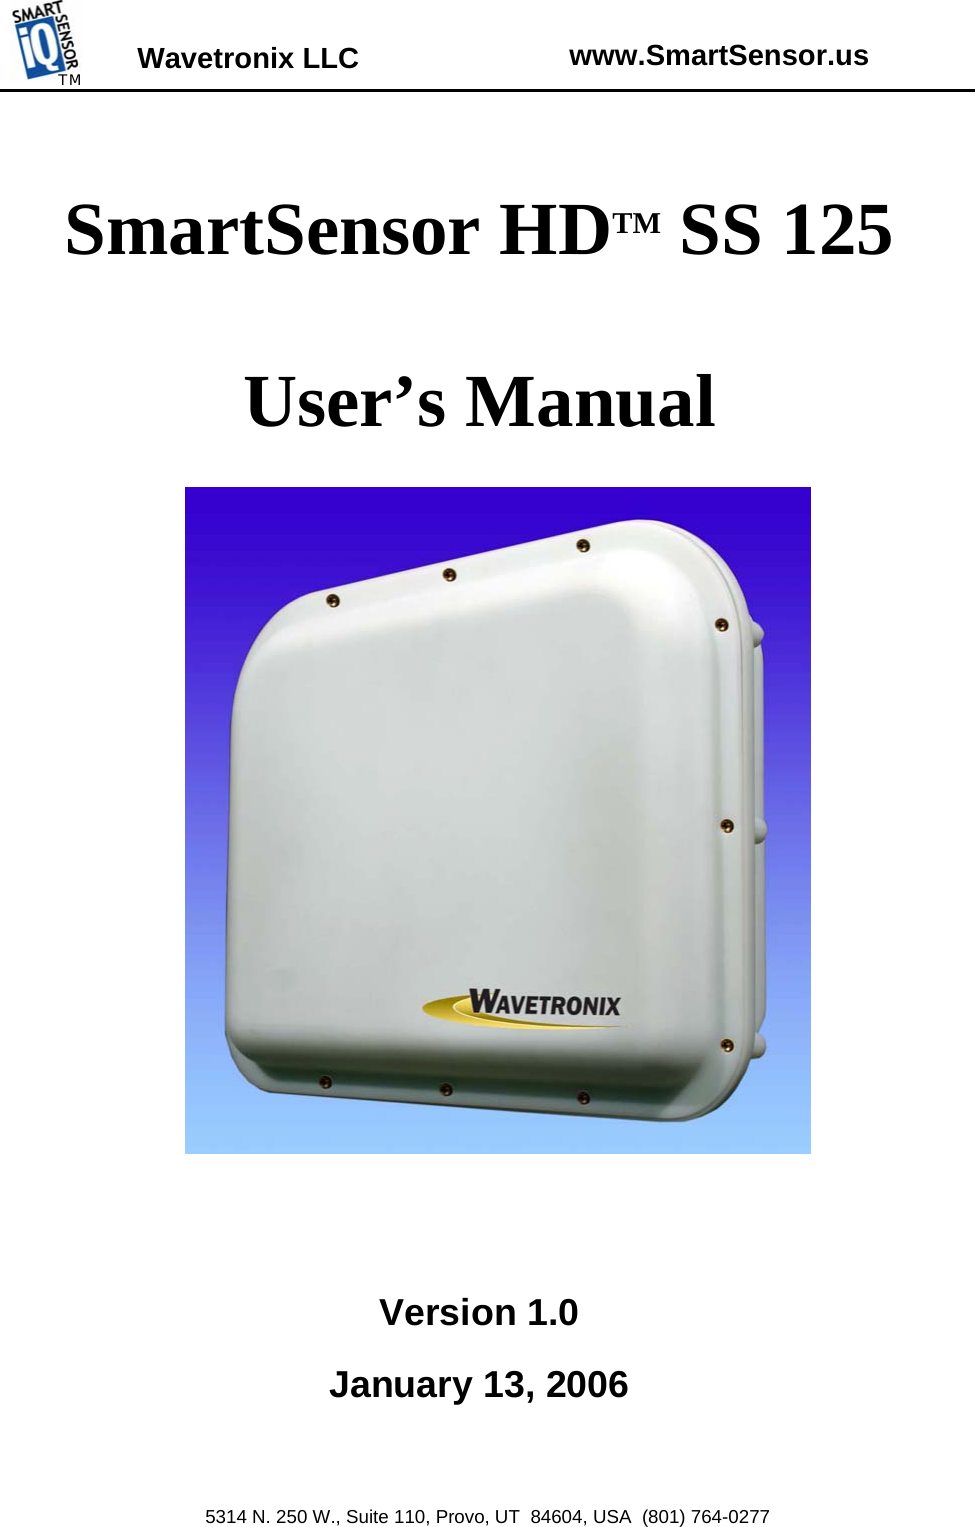  Wavetronix LLC  www.SmartSensor.us TM  SmartSensor HDTM SS 125  User’s Manual                              Version 1.0  January 13, 2006   5314 N. 250 W., Suite 110, Provo, UT  84604, USA  (801) 764-0277 